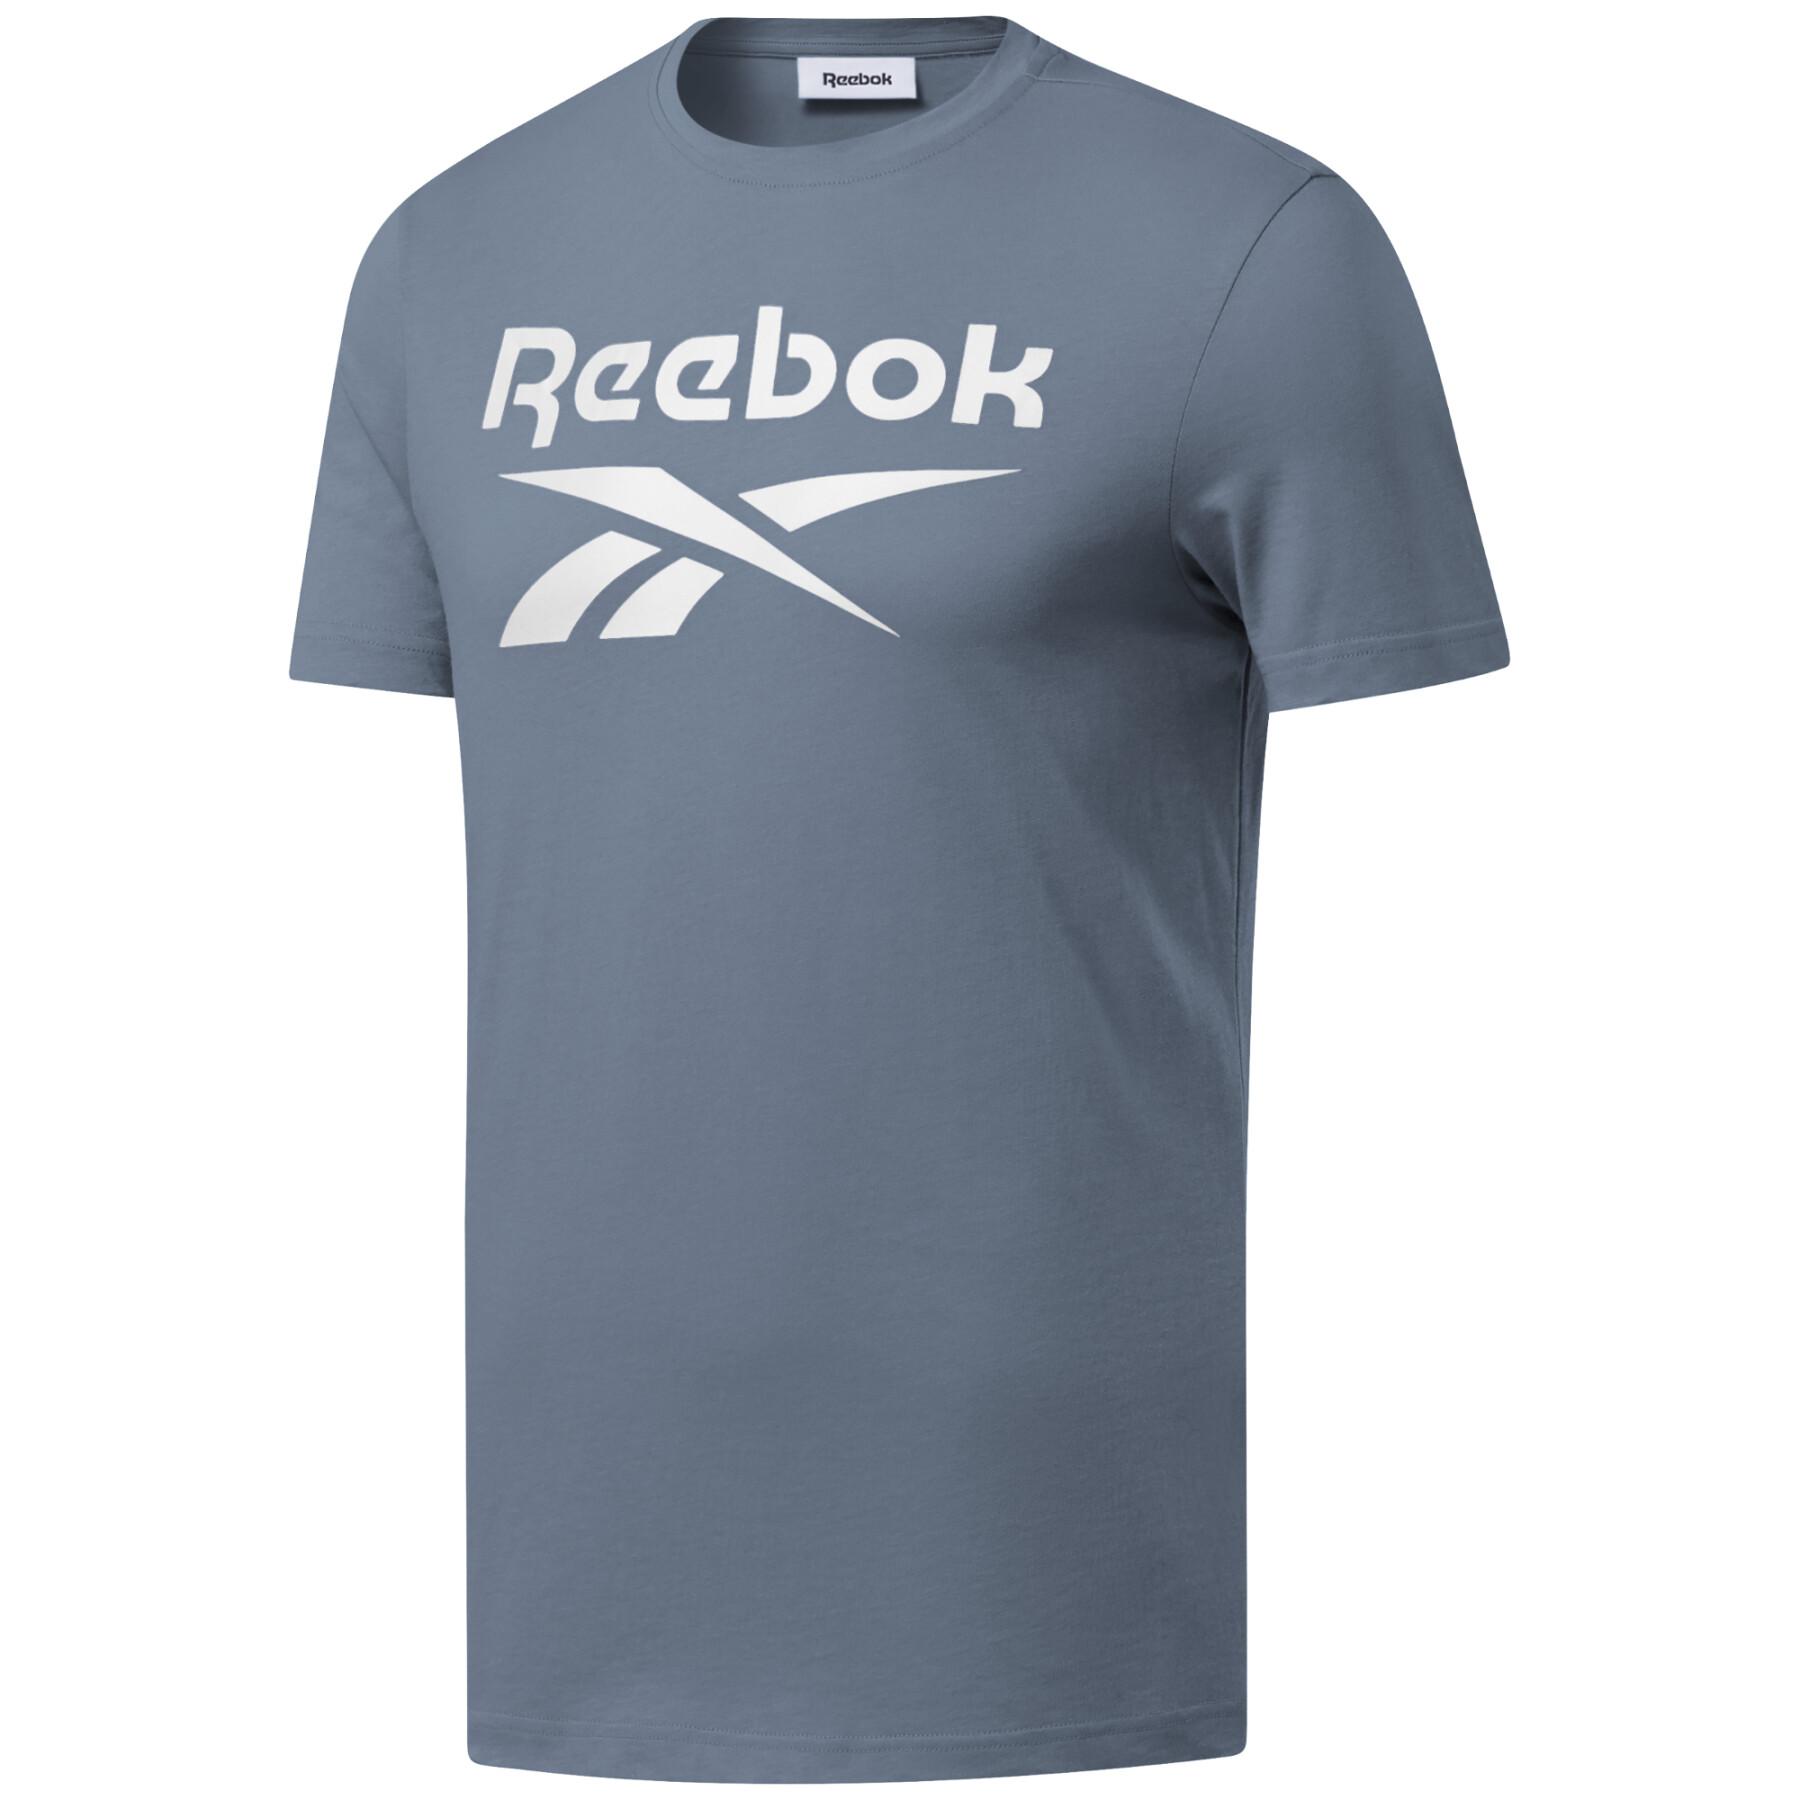 Camiseta impreso Reebok Series Stacked